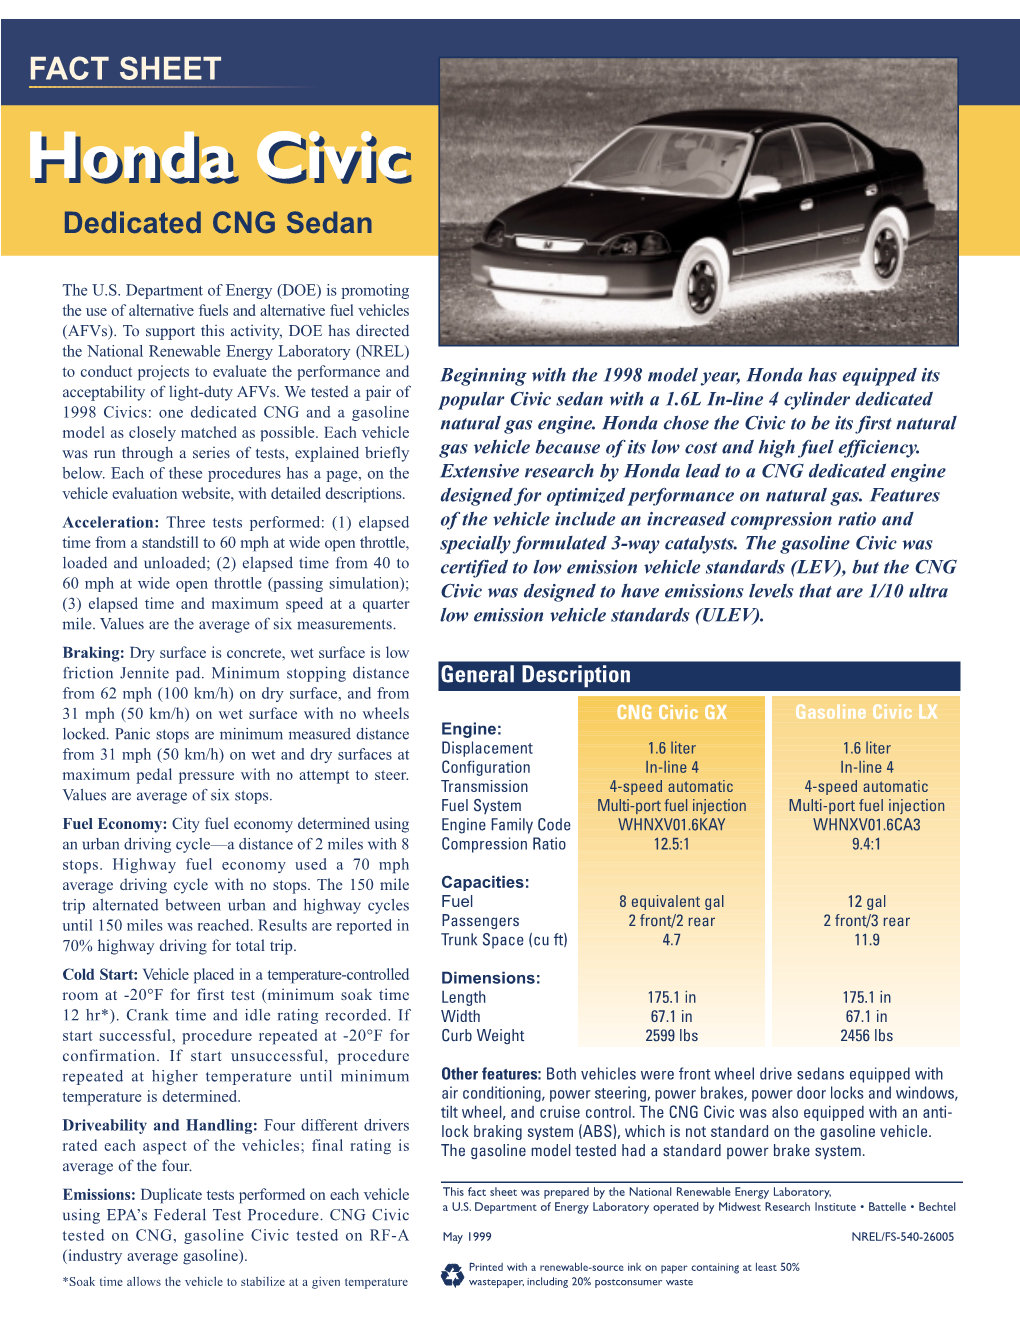 Honda Civiccivic Dedicated CNG Sedan